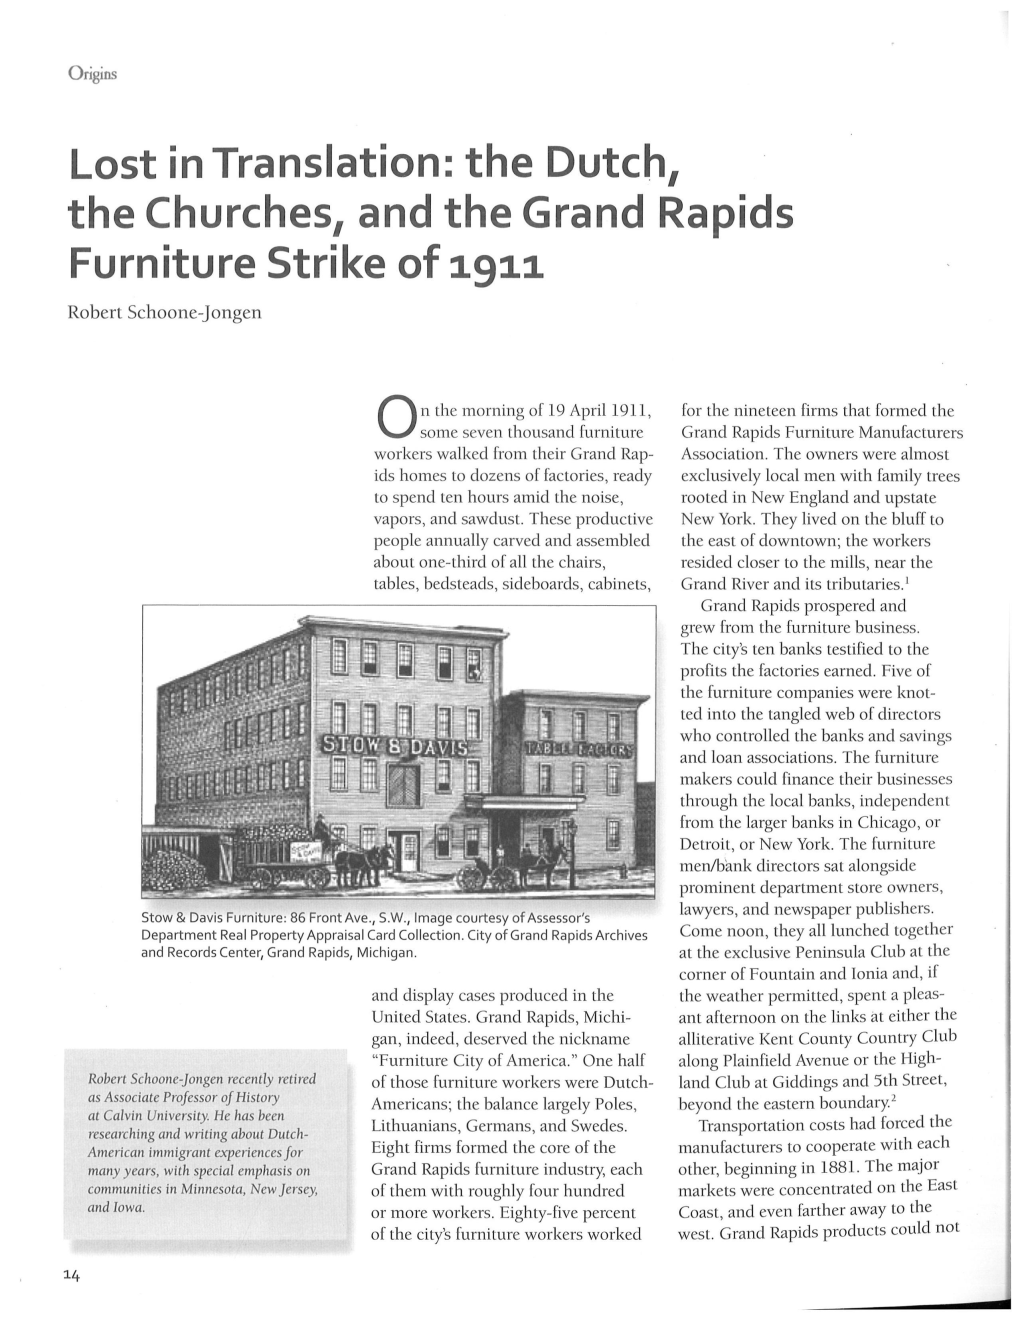 The Dutch, the Churches, and the Grand Rapids Furniture Strike of 1911 Robert Schoone-Jongen